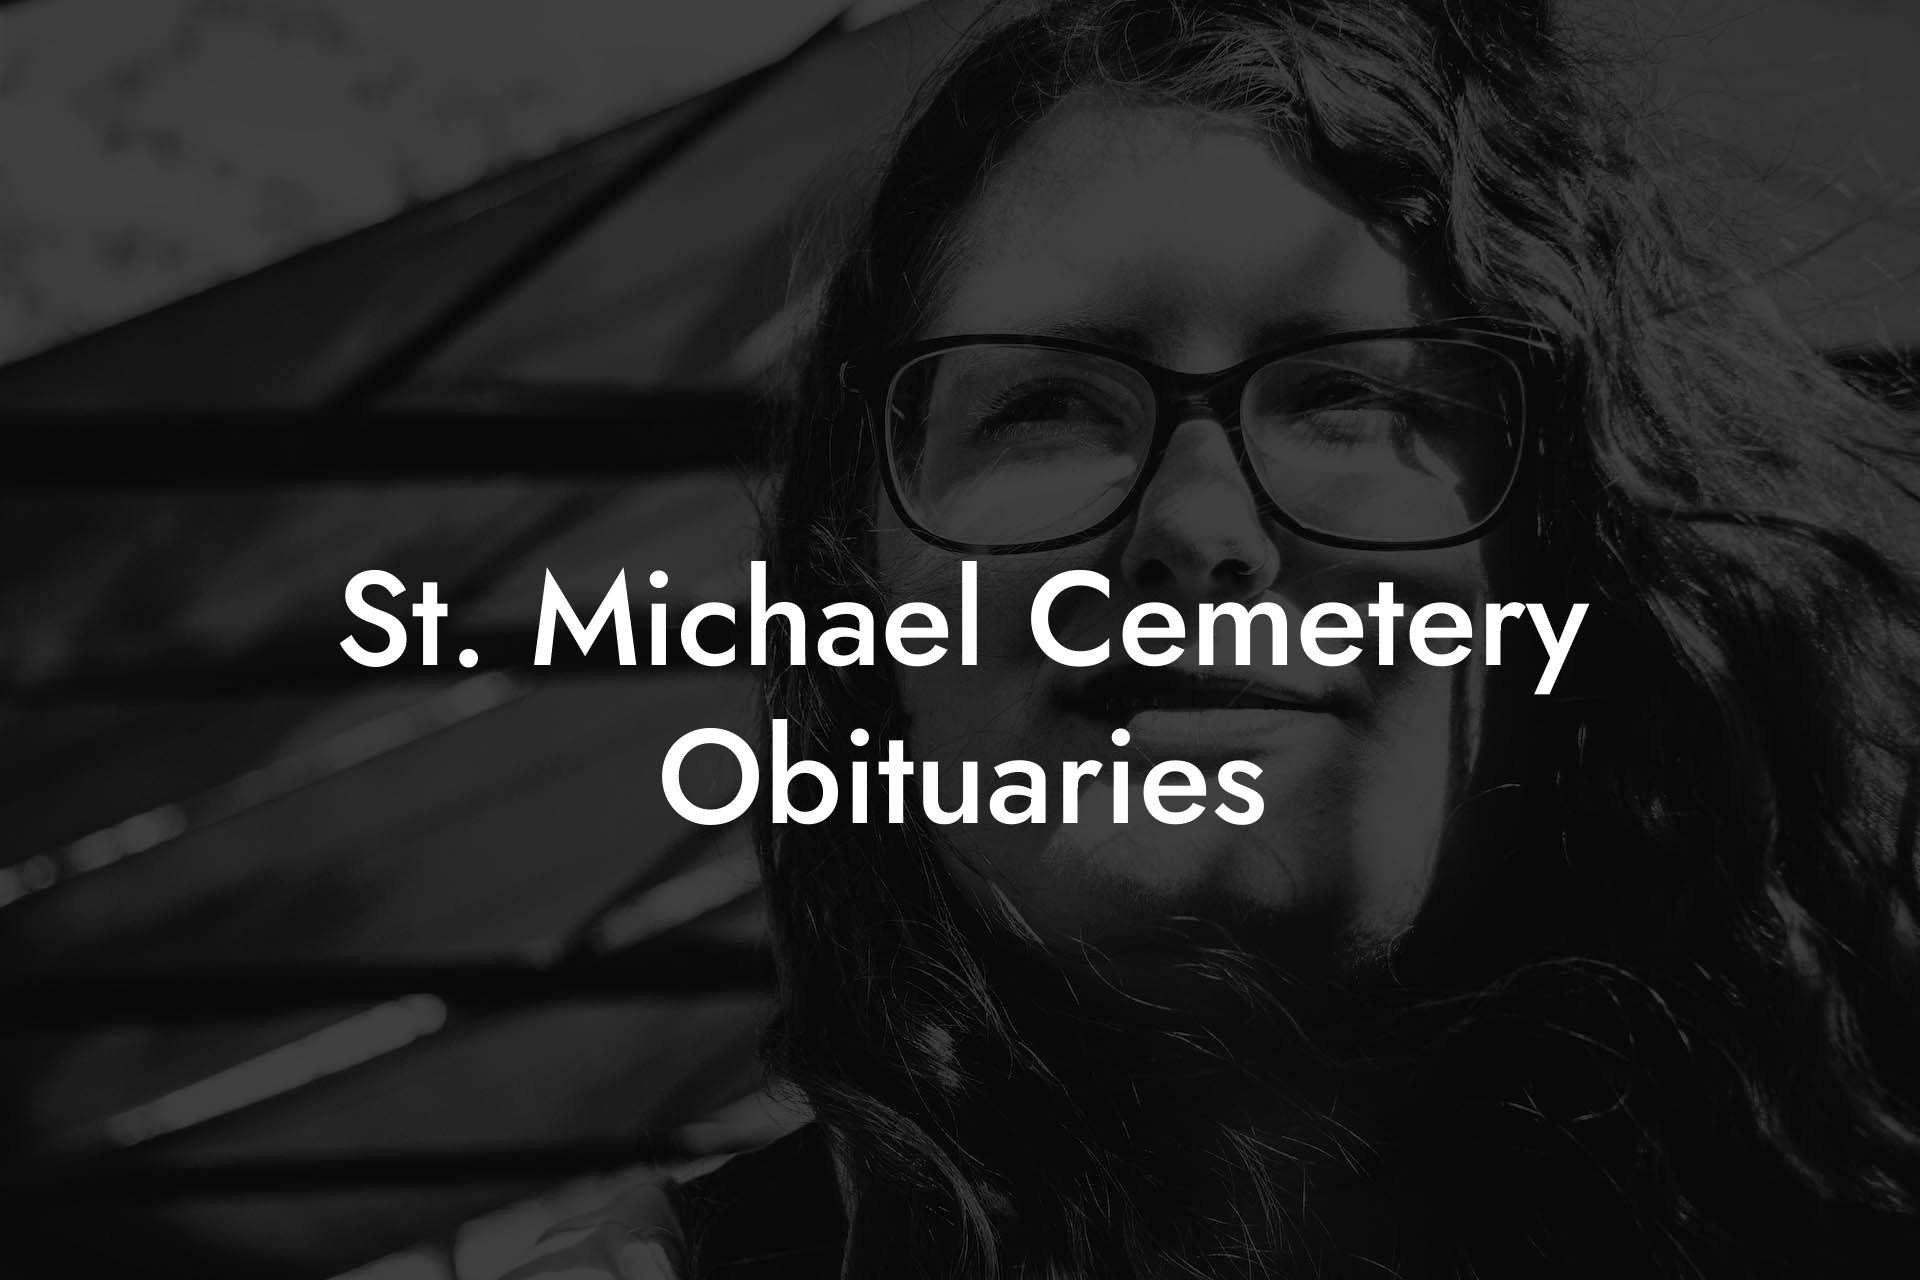 St. Michael Cemetery Obituaries